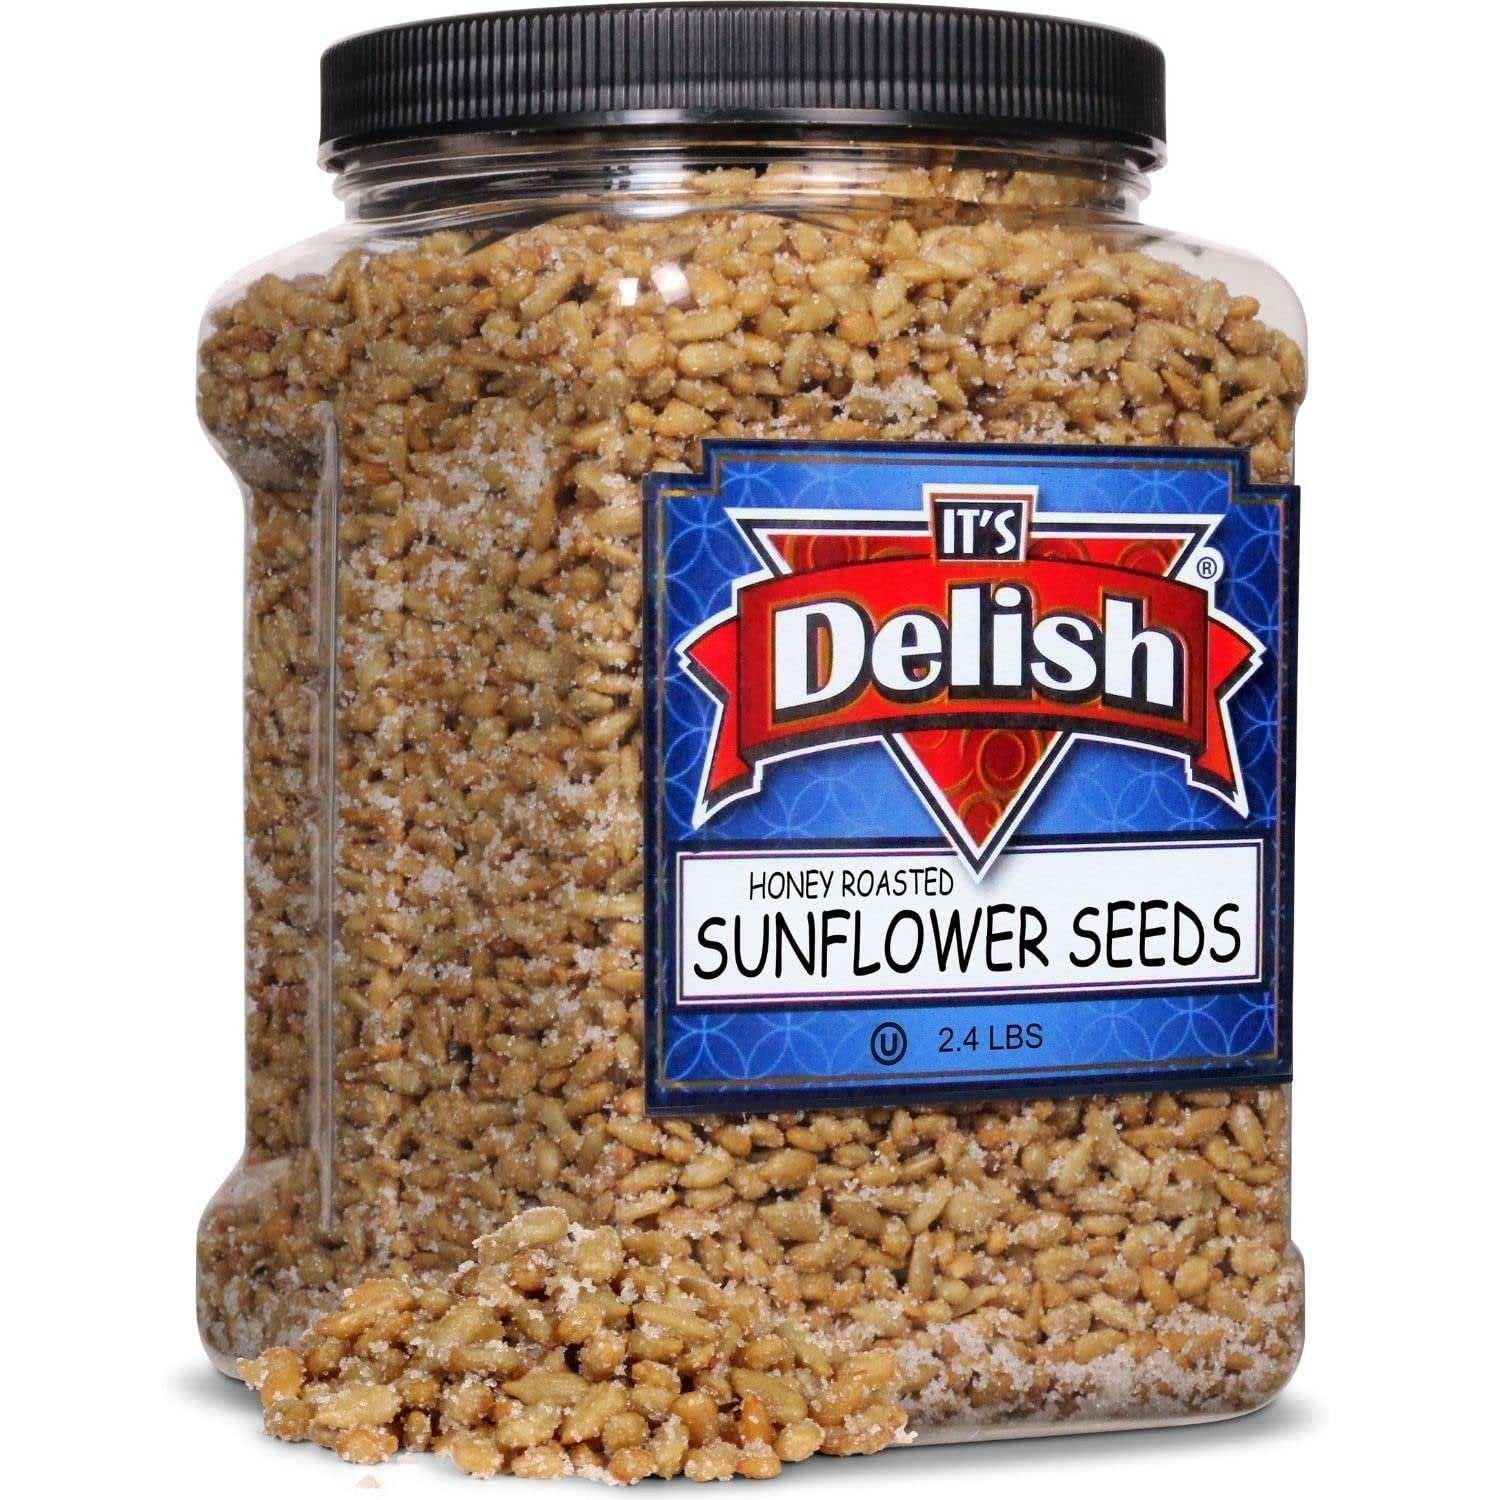 Honey Roasted Sunflower Seeds, 2.4 LBS Reusable Jumbo Container